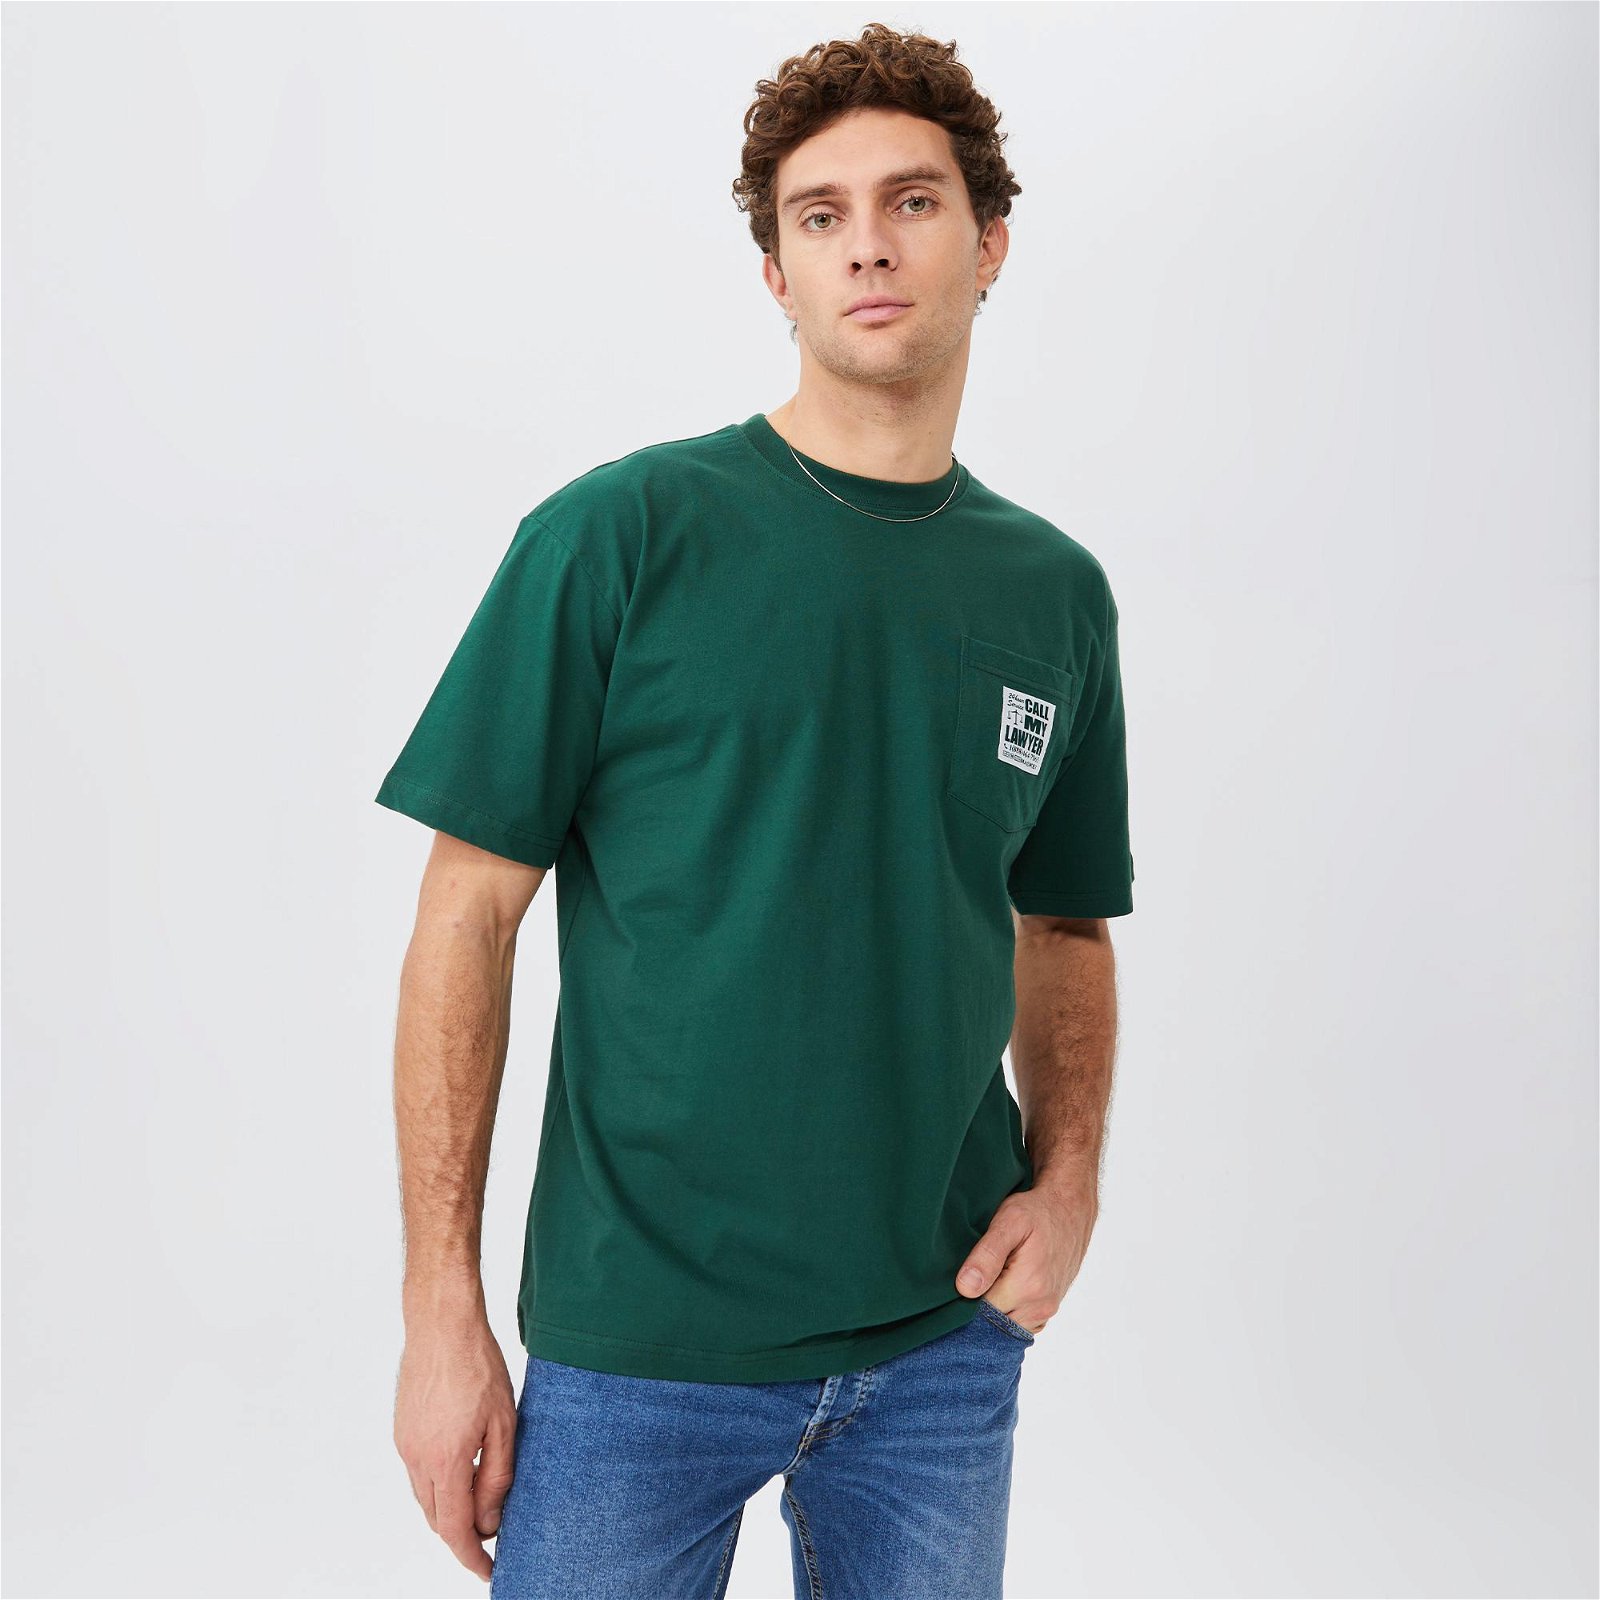 Market 24 Hr Lawyer Service Pocket Erkek Yeşil T-Shirt